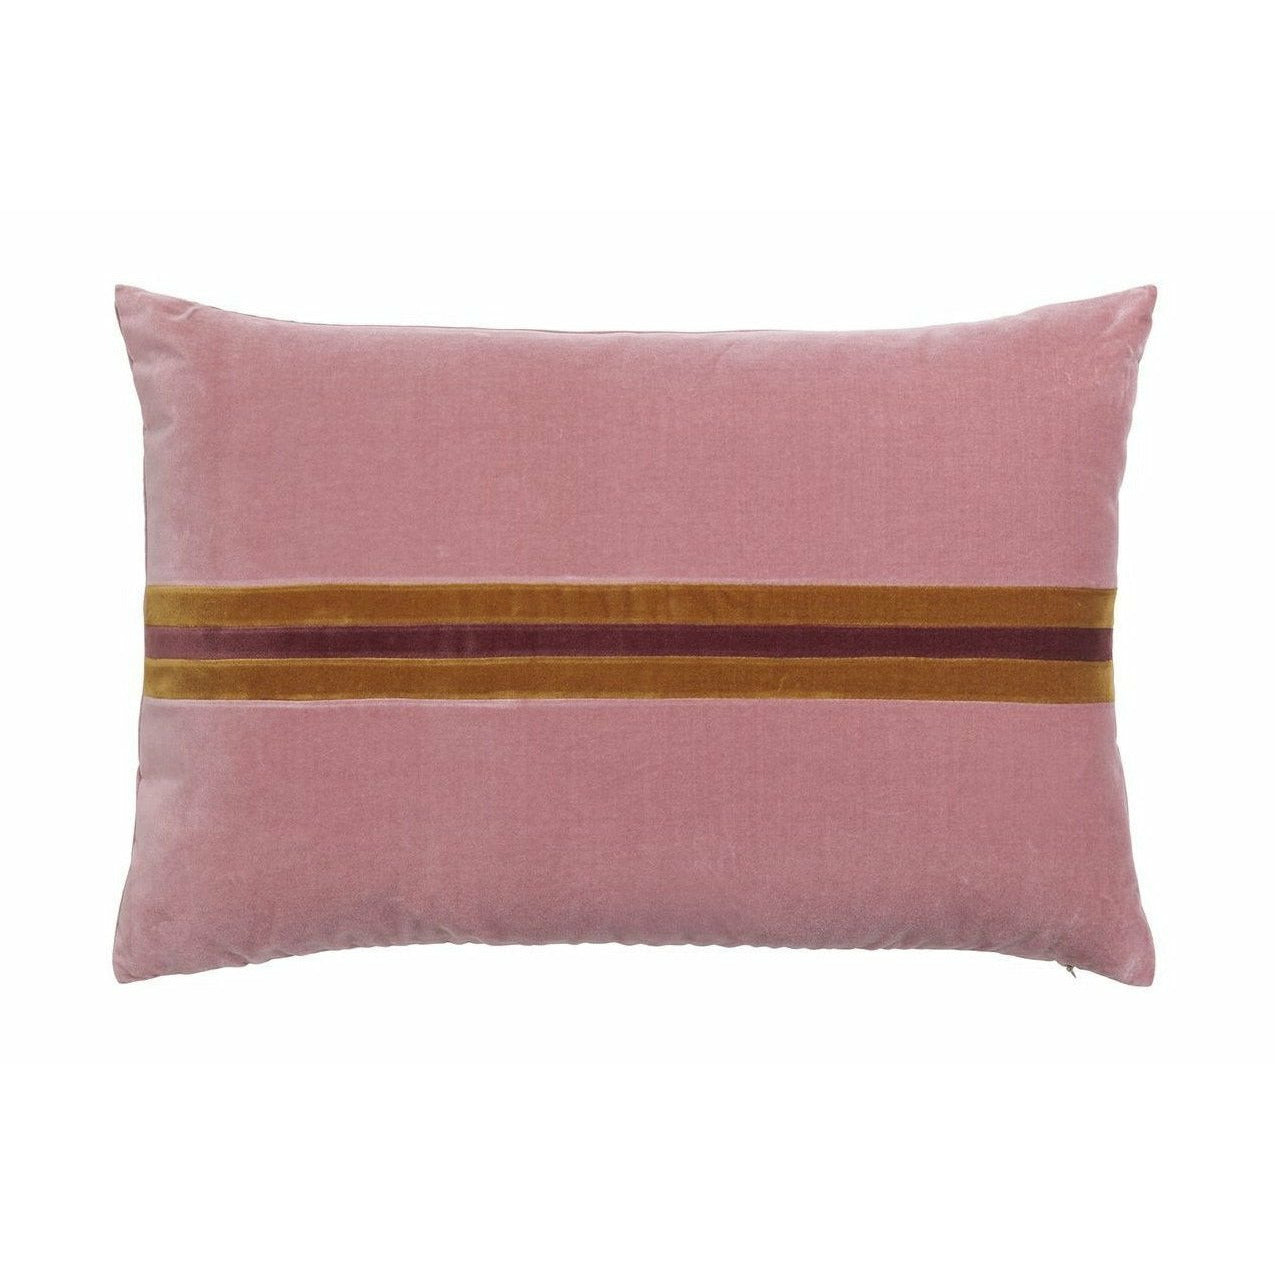 Christina Lundsteen Harlow Velvet Pillow, Old Rose / Caramel / Prune